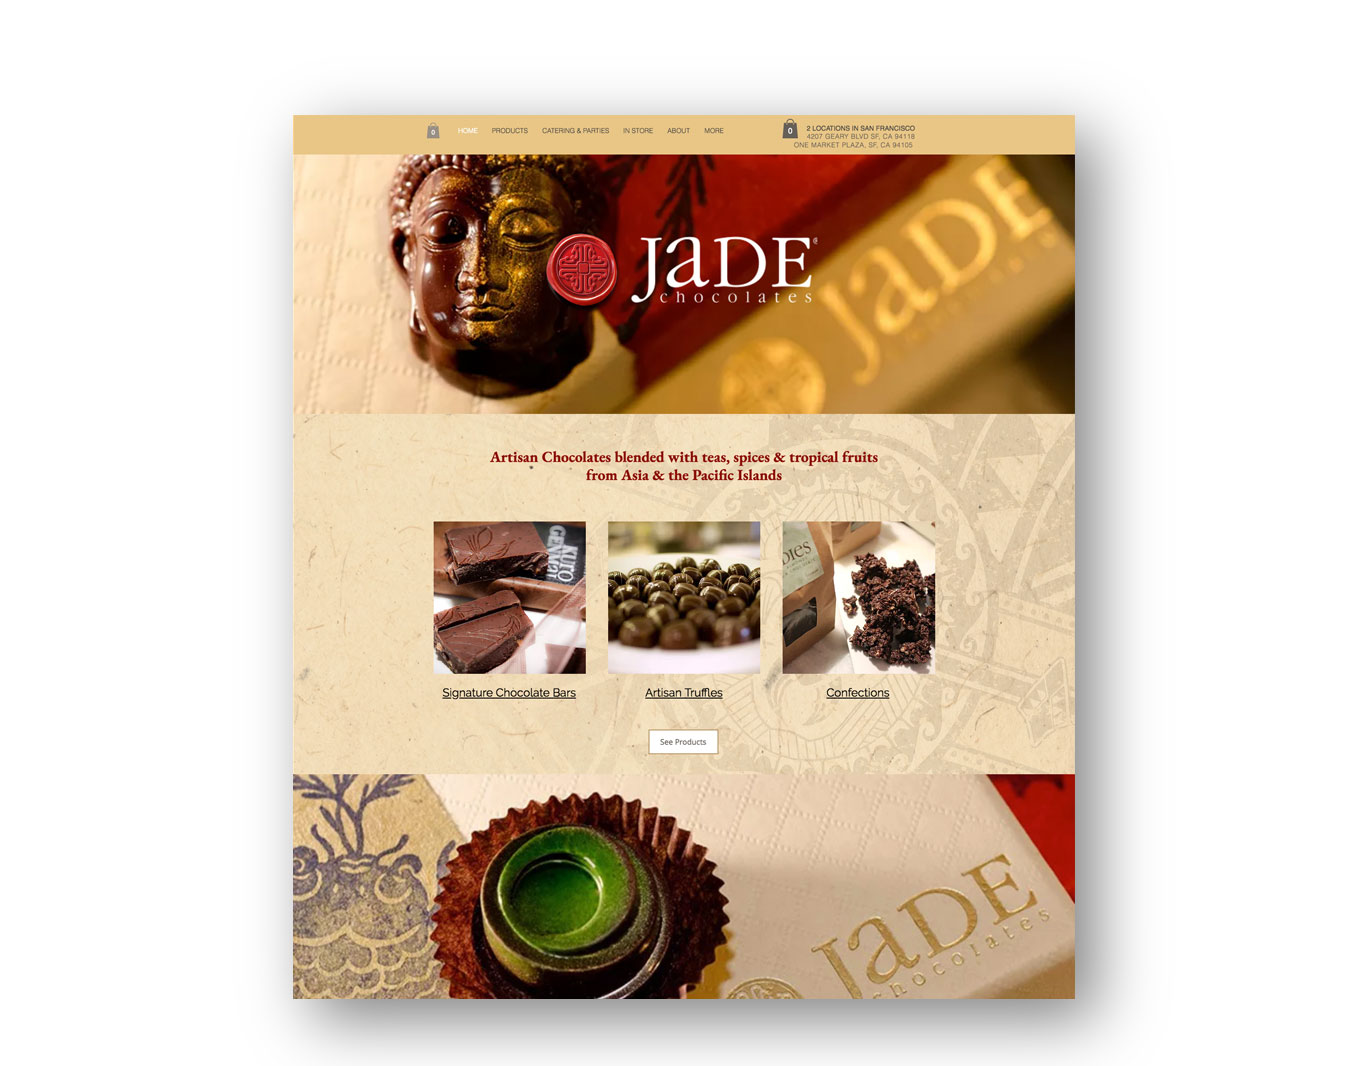 Digital Promotion- Jade Chocolates